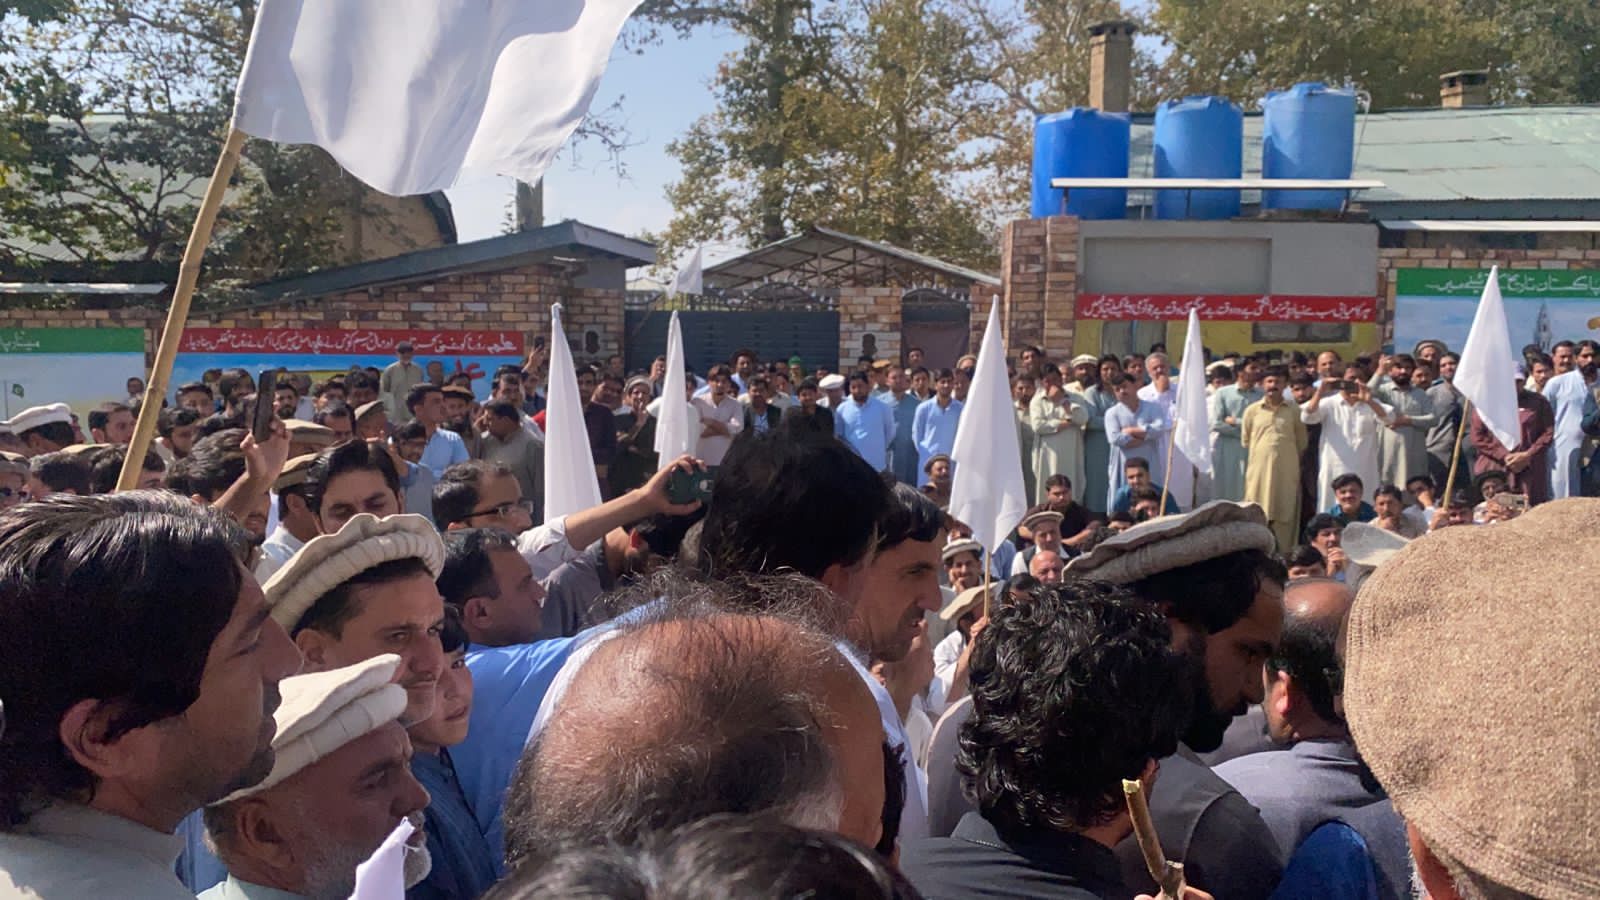 KPK Kurram Agency Protest 